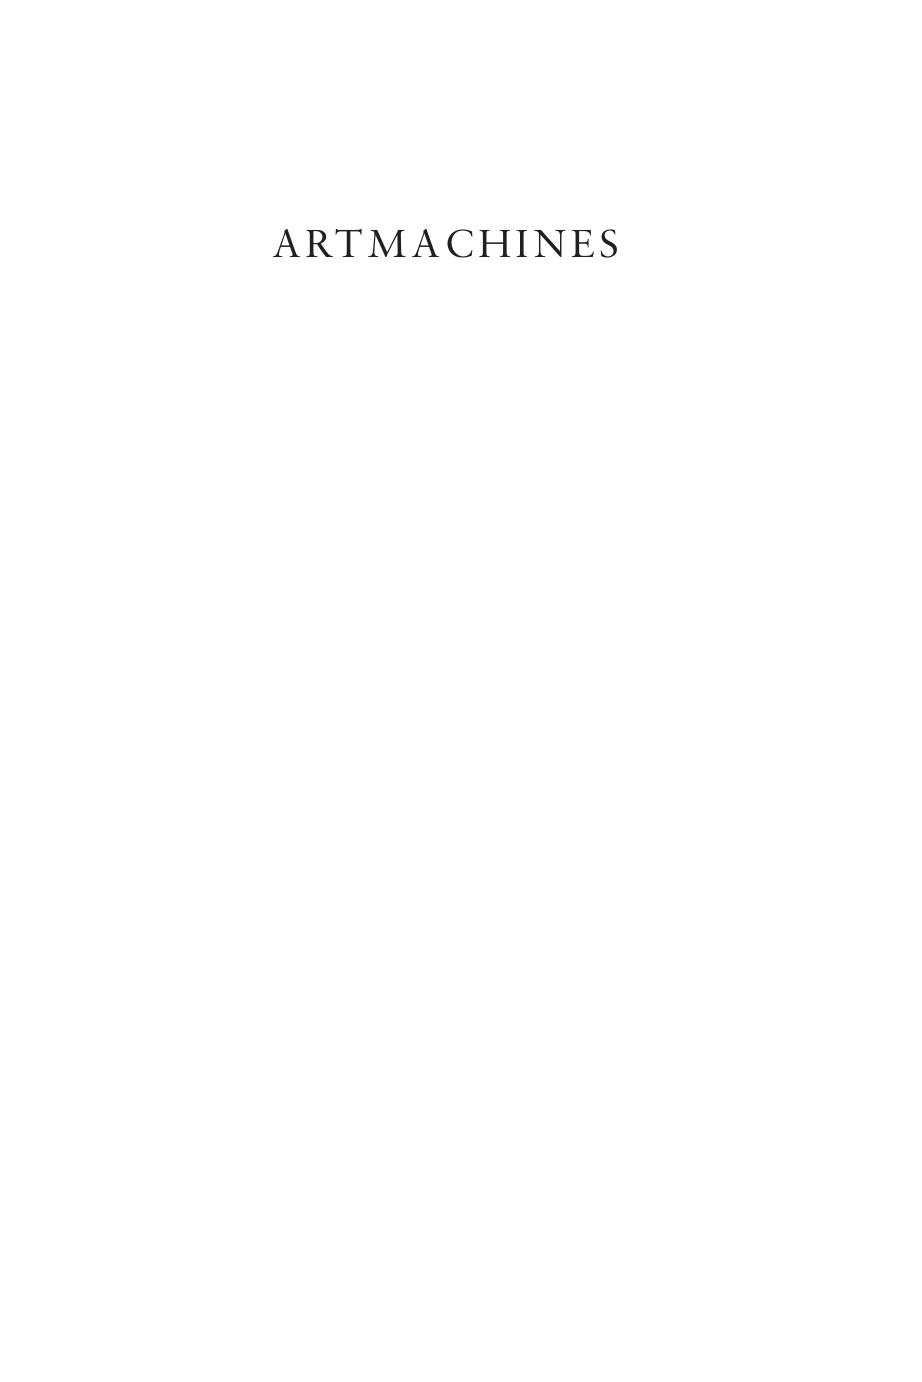 Artmachines: Deleuze, Guattari, Simondon by Anne Sauvagnargues; Suzanne Verderber; Eugene W. Holland